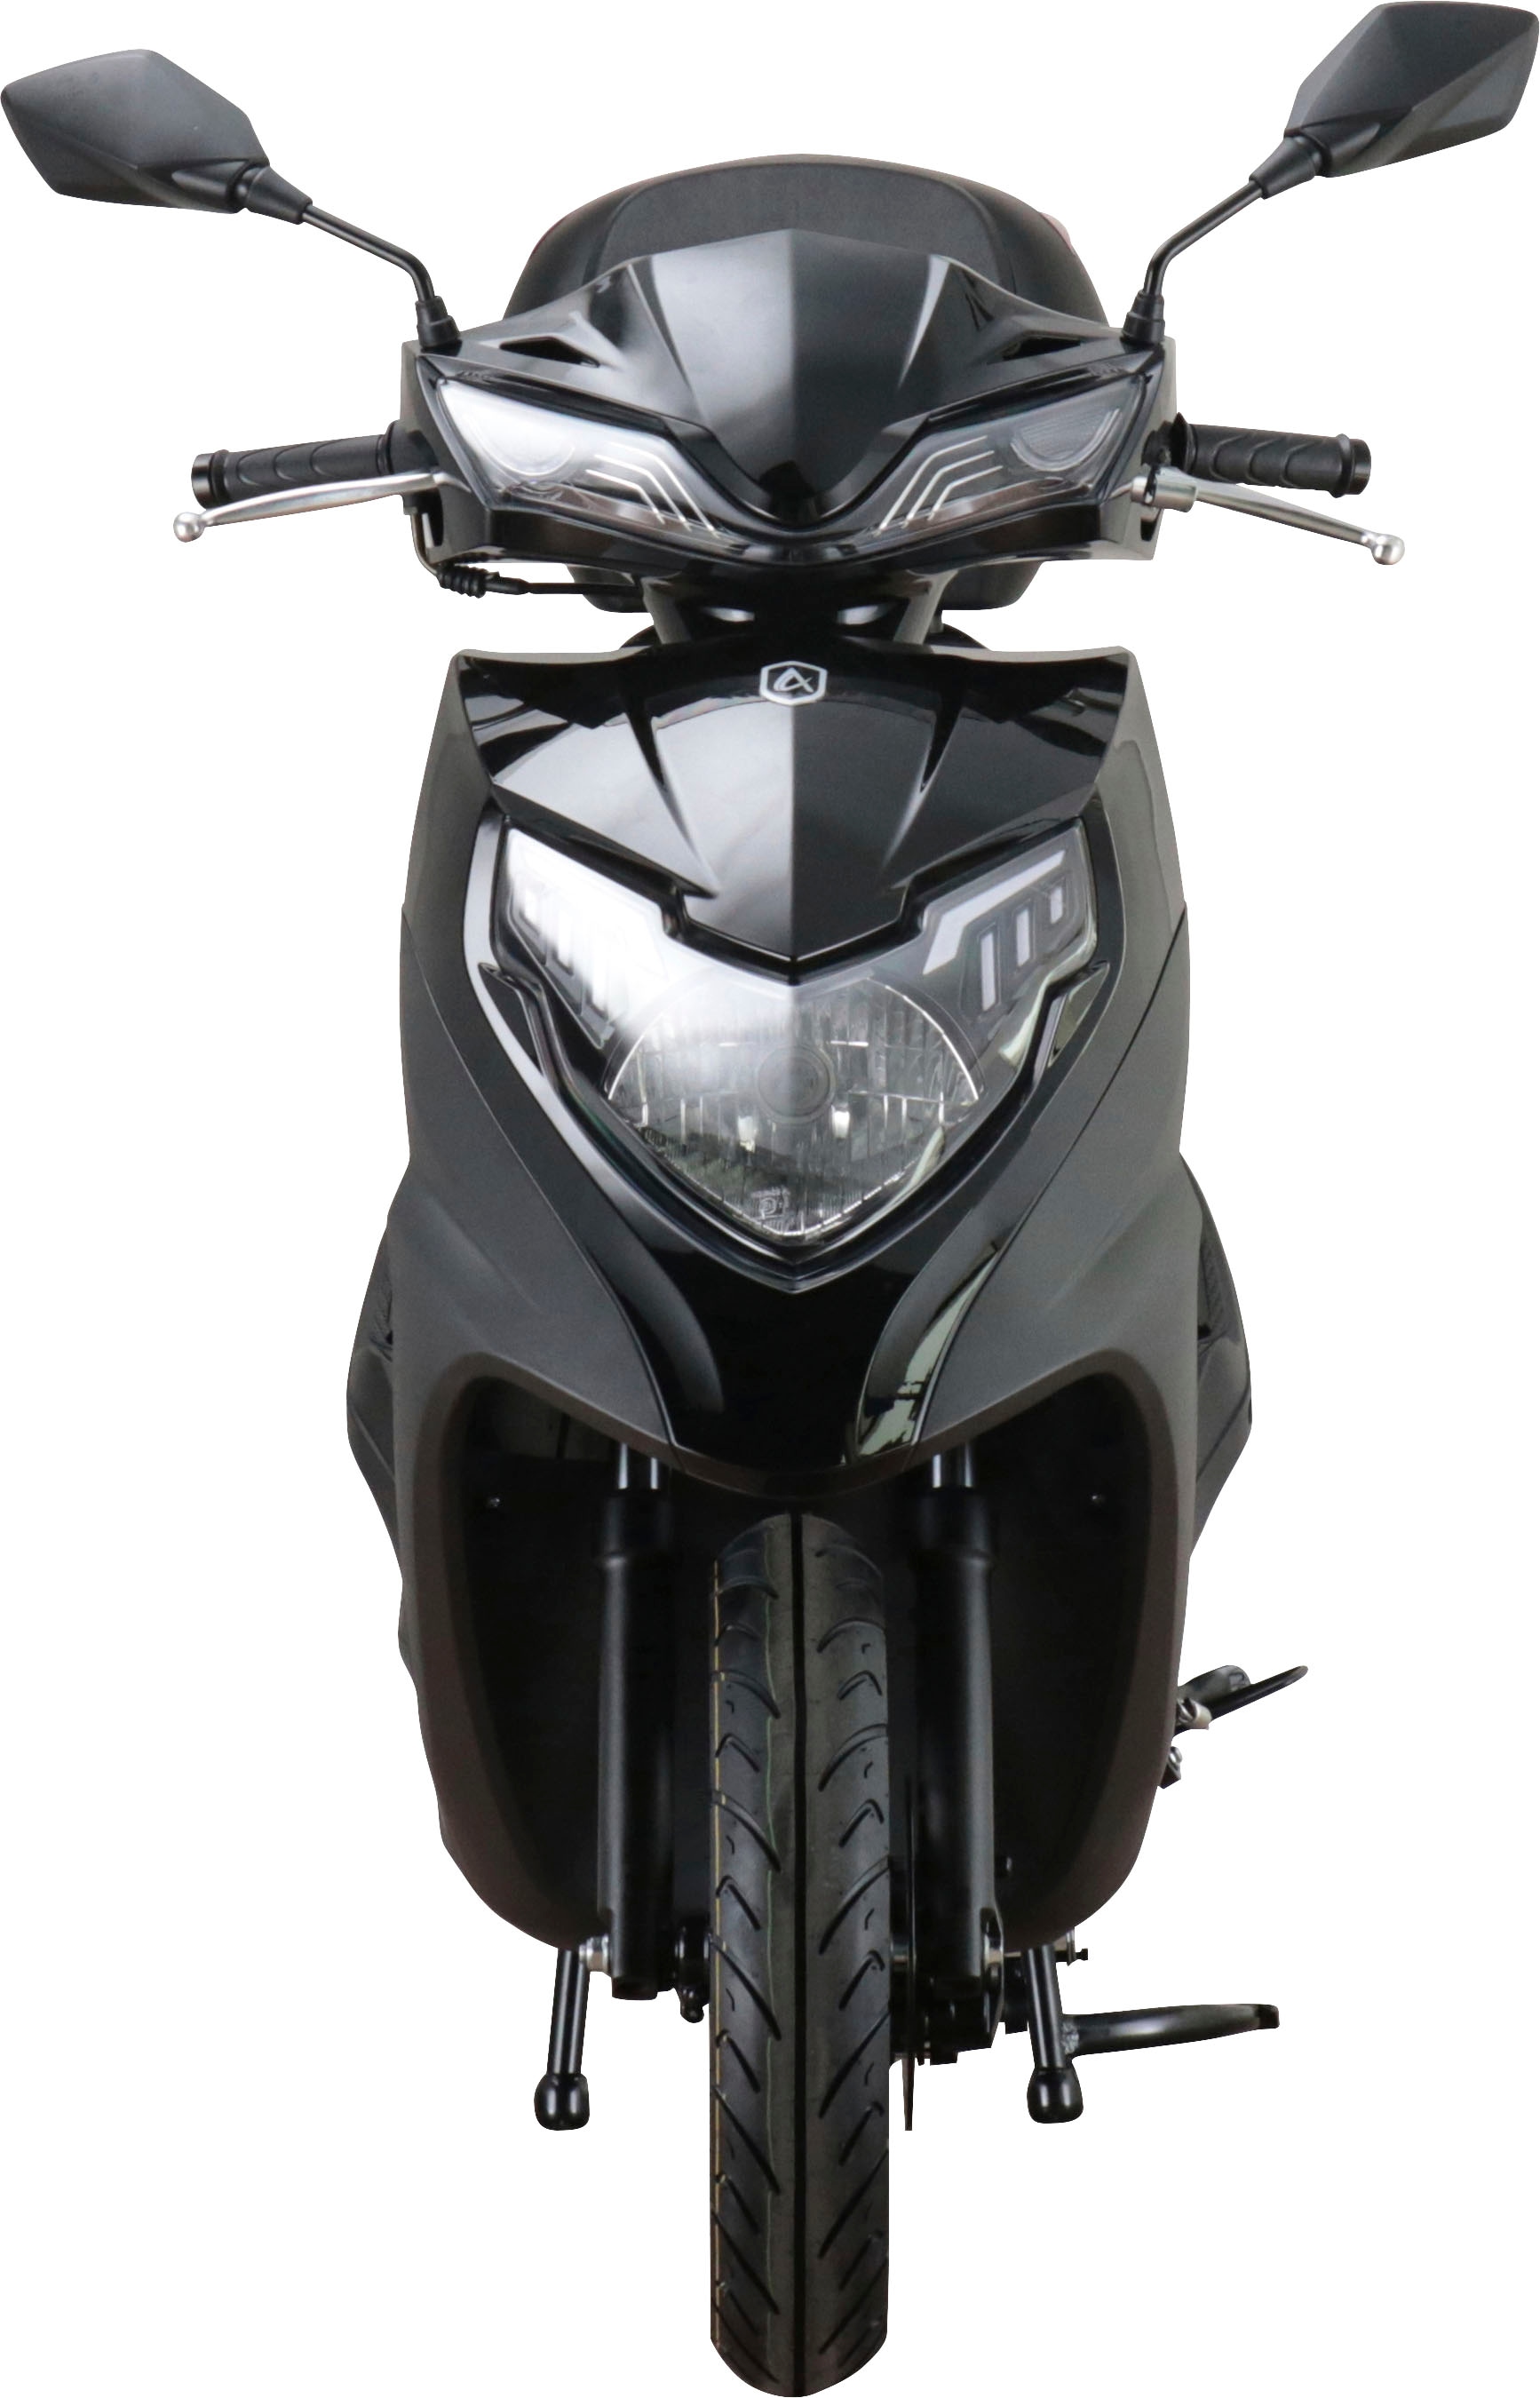 Alpha Motors Motorroller »Topdrive«, 125 cm³, 85 km/h, Euro 5, 8,56 PS, inkl. Topcase